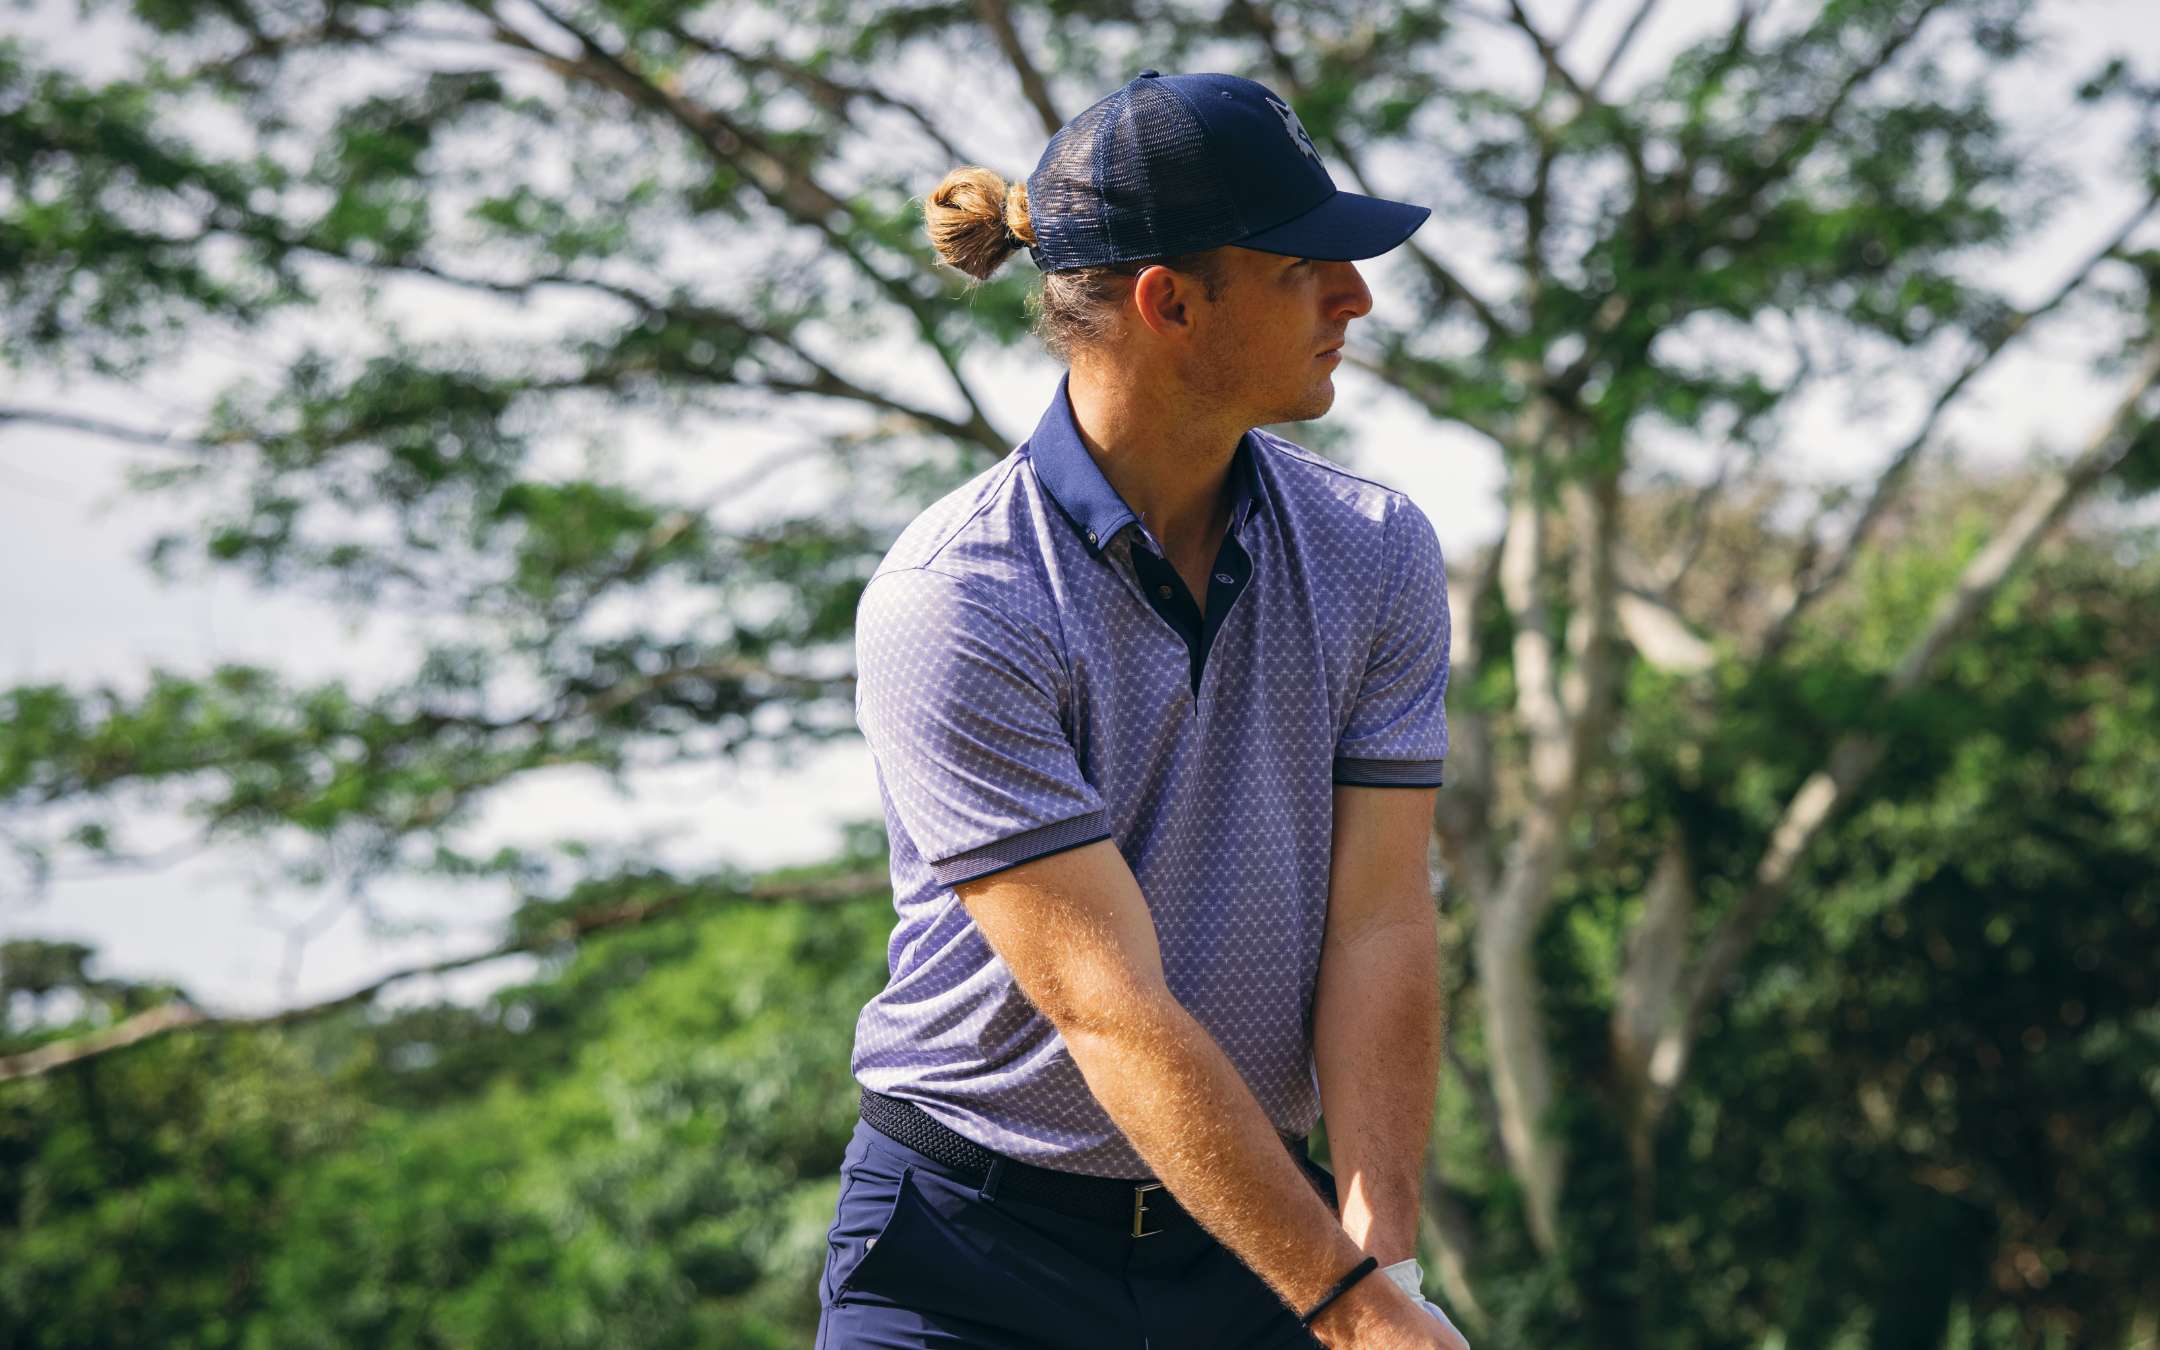 Men's Performance Golf Polo Shirts - Greyson Clothiers